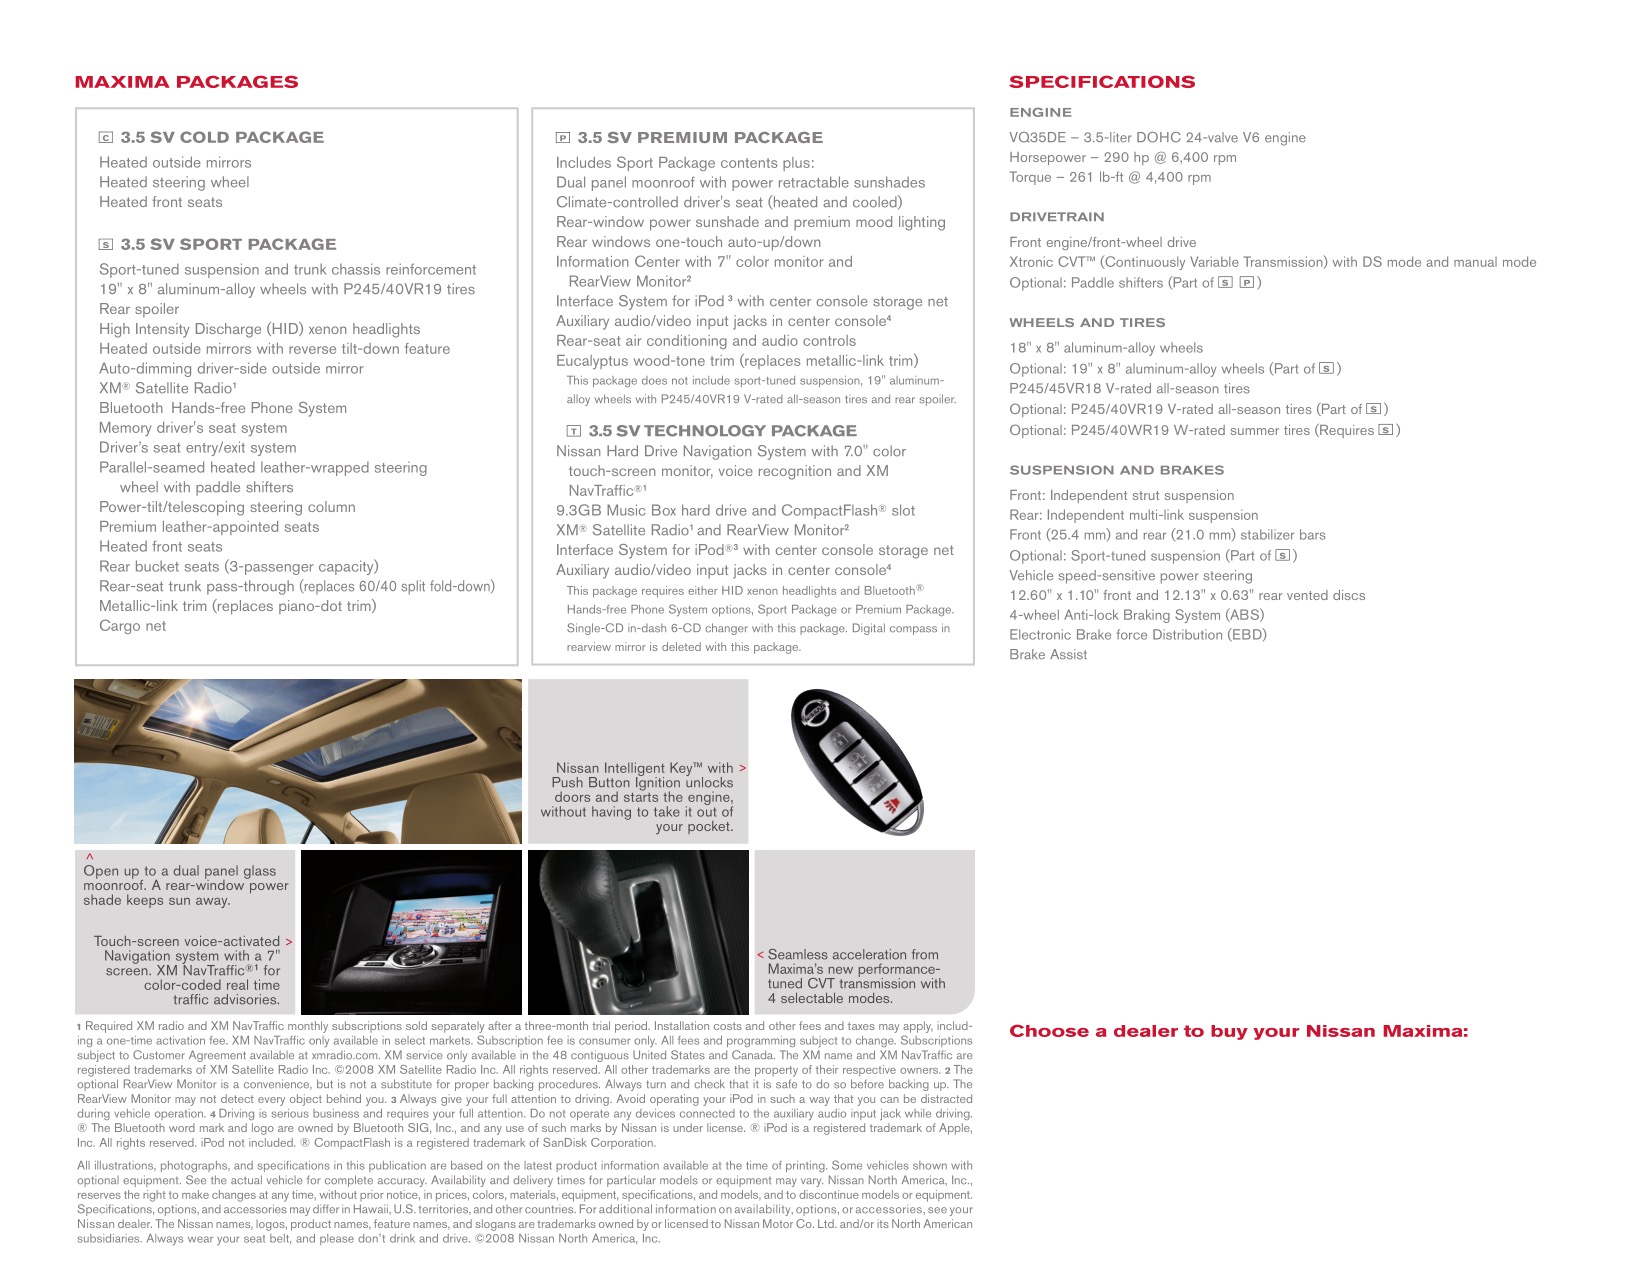 2009 Nissan Maxima Brochure Page 2